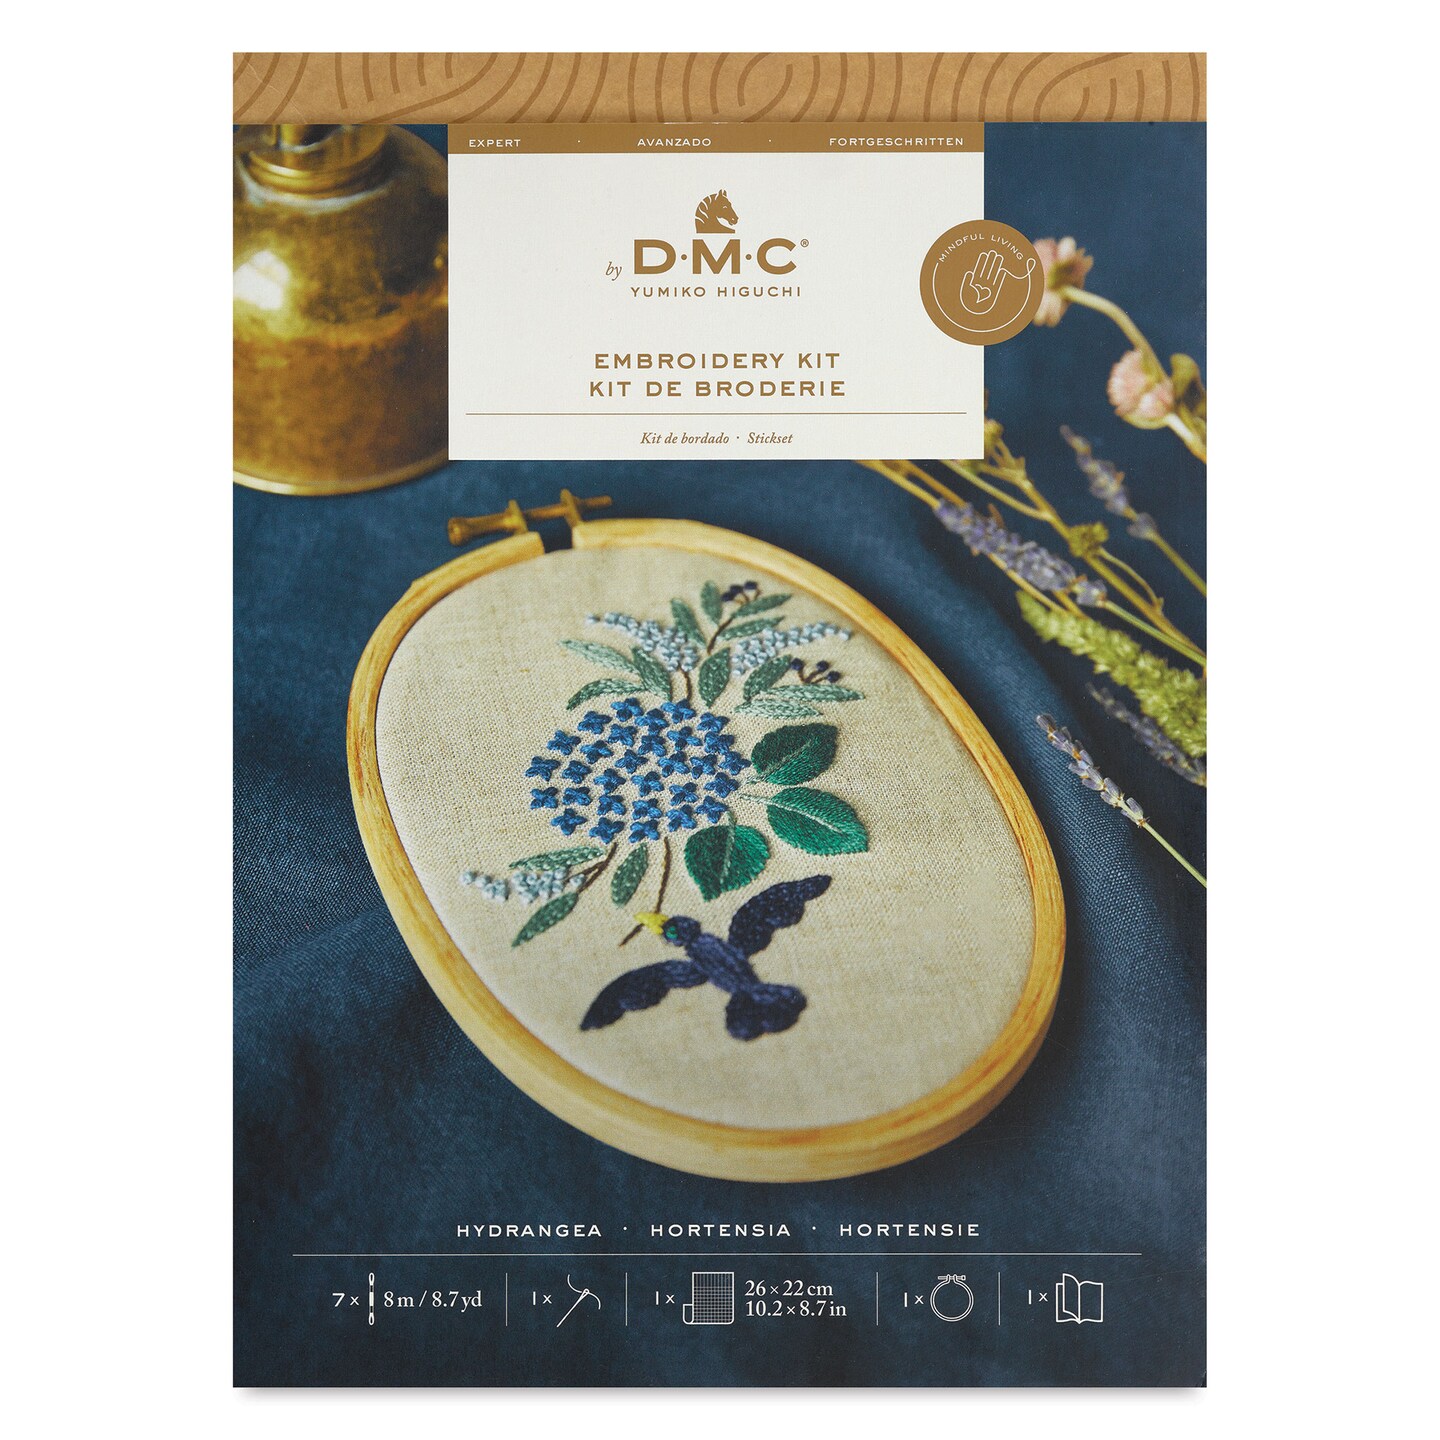 DMC The Designer Collection Embroidery Kits - &#x201C;Hydrangea&#x201D; by Yumiko Higuchi, Advanced